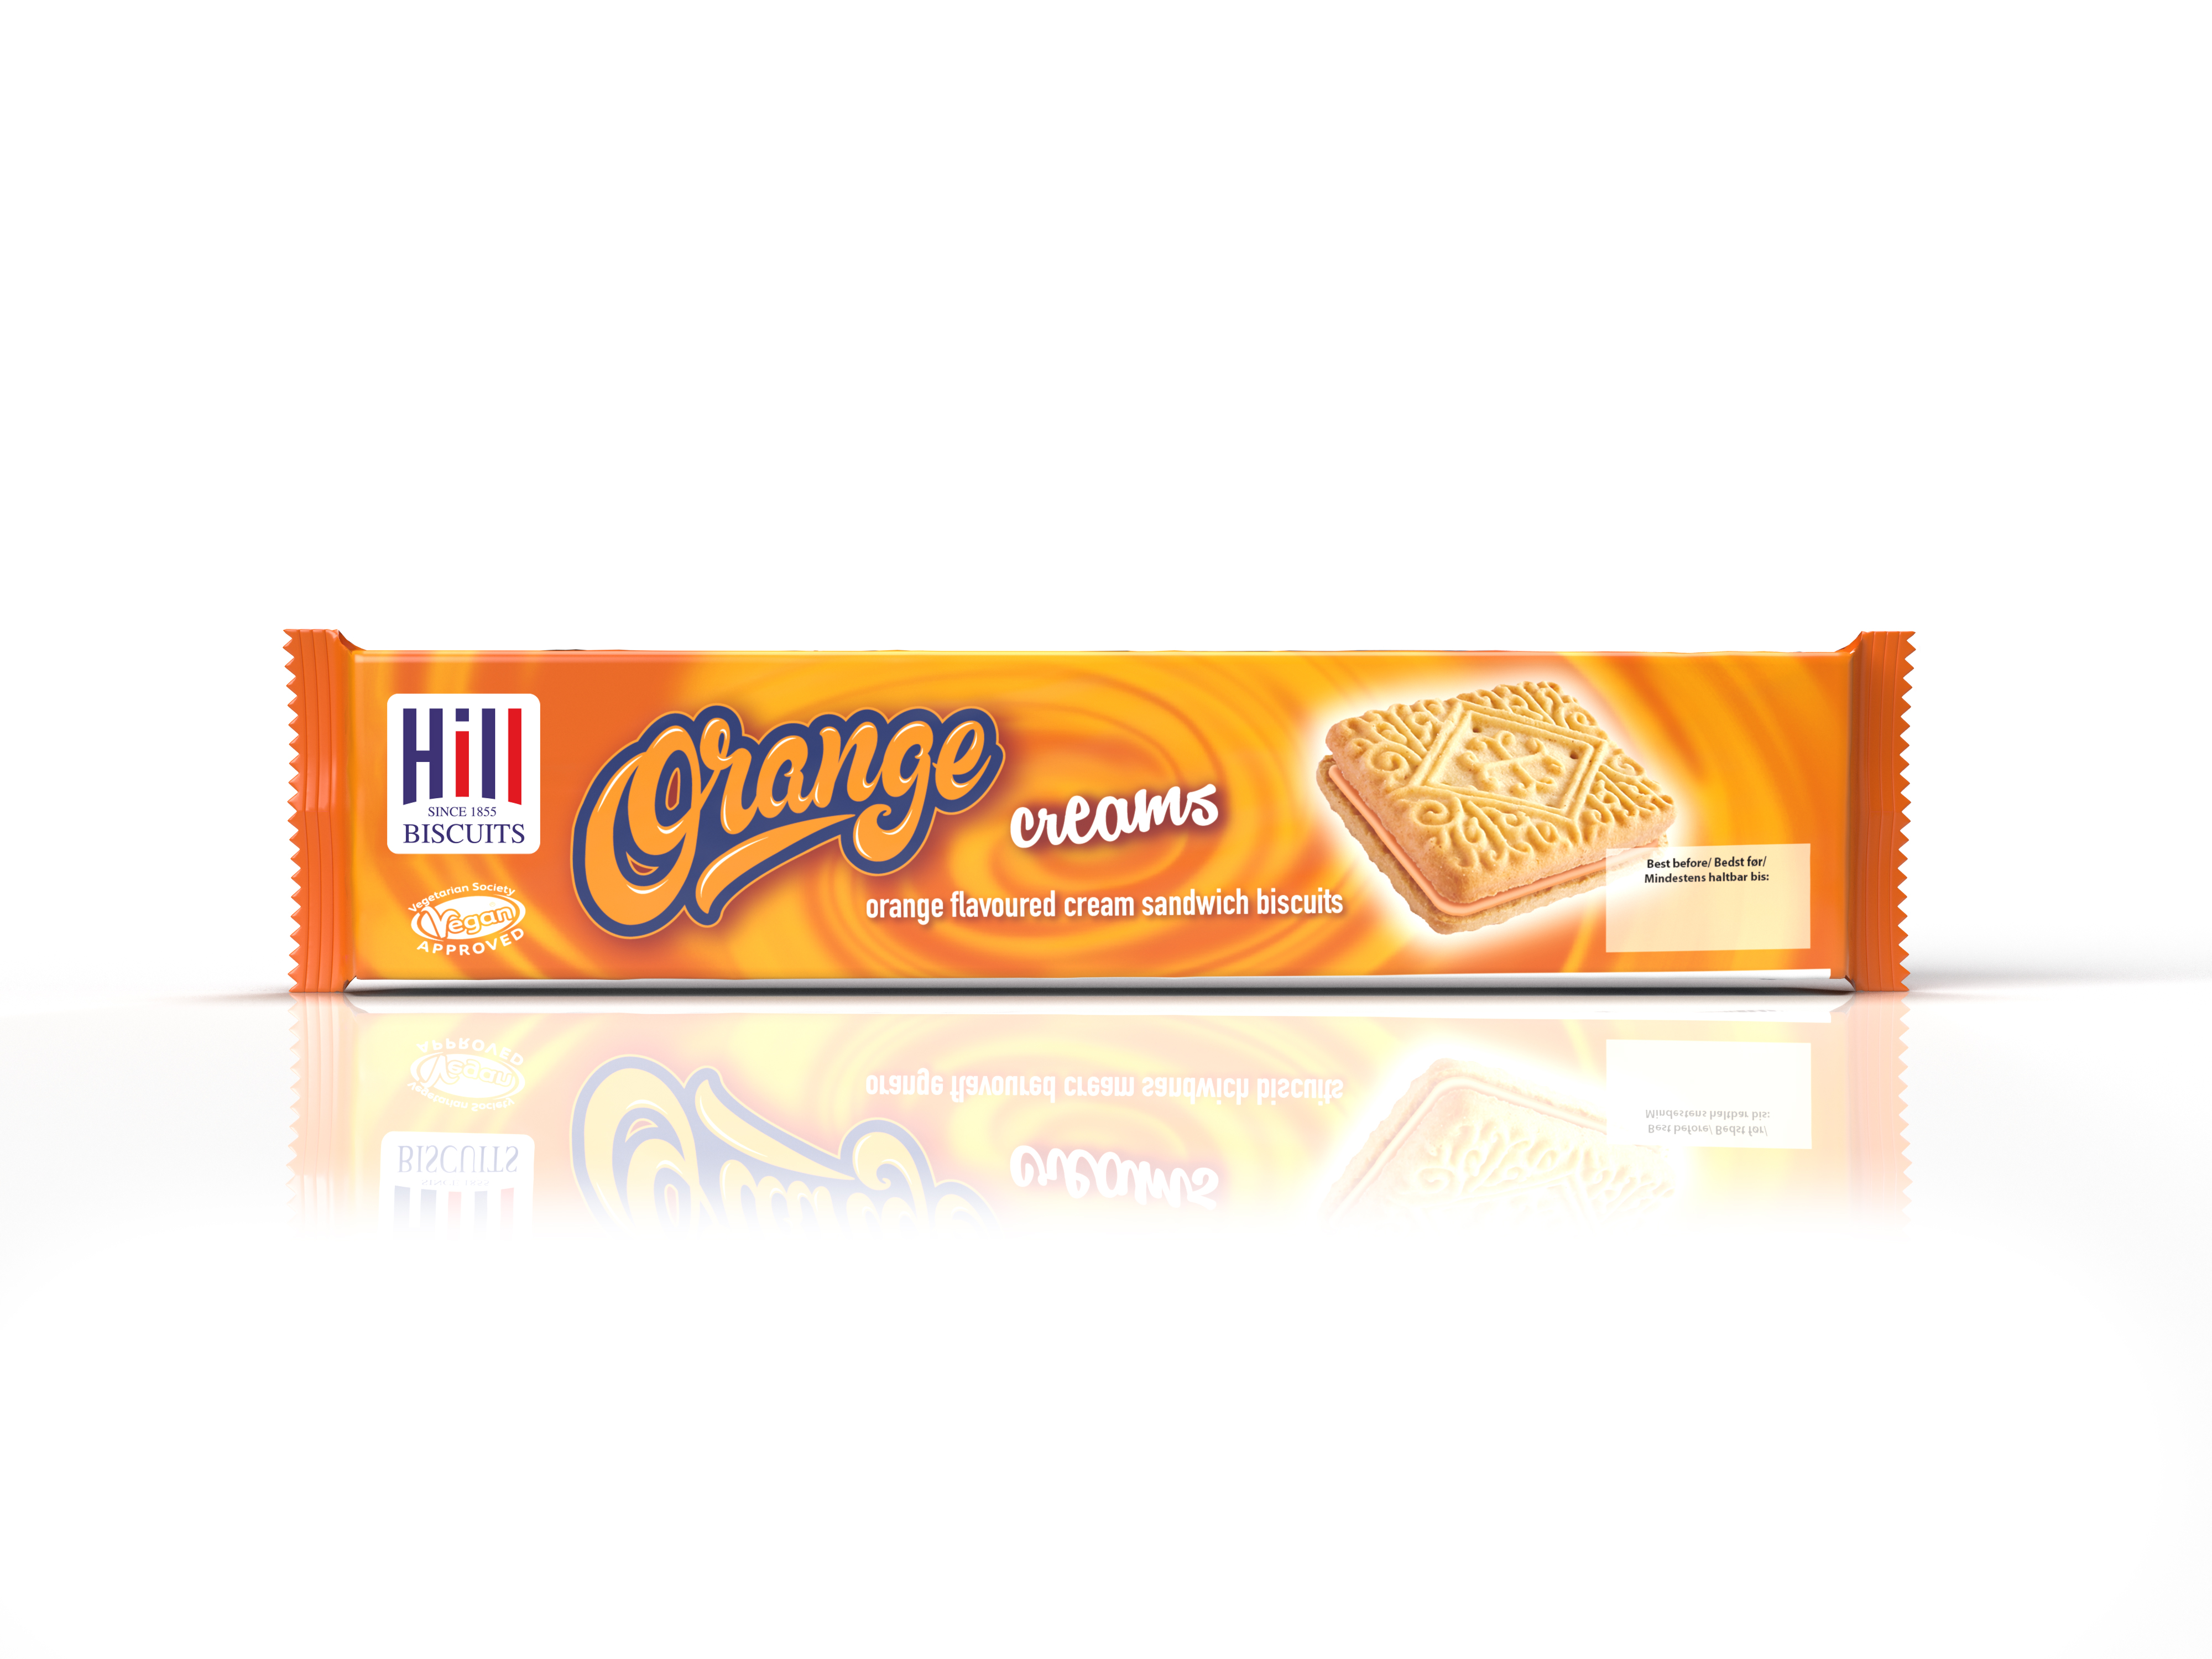 Hill Orange Creams 36x150g